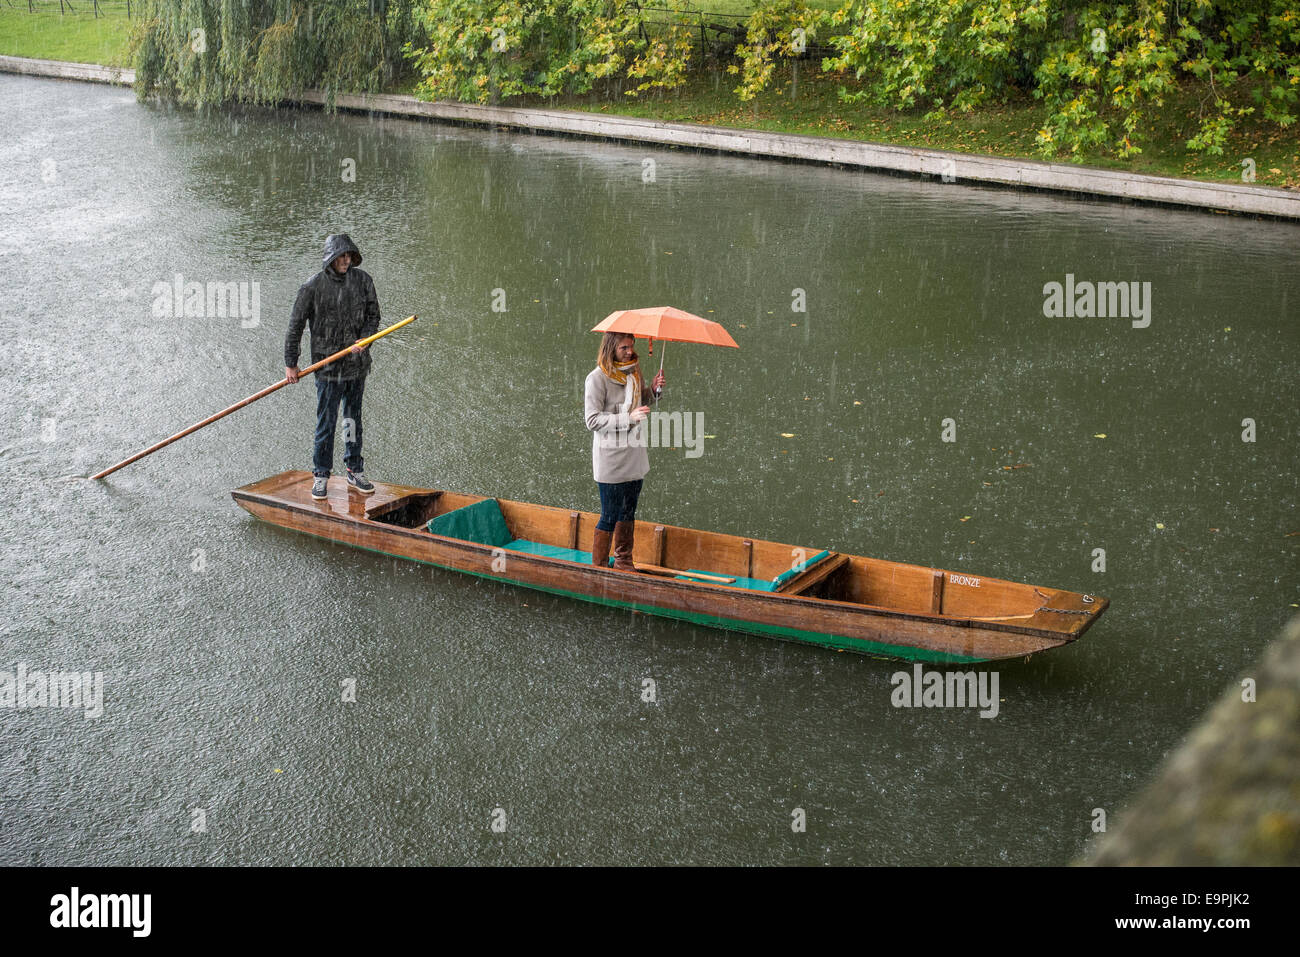 Regendusche während Bootfahren auf dem Fluss Cam, Cambridge UK Stockfoto